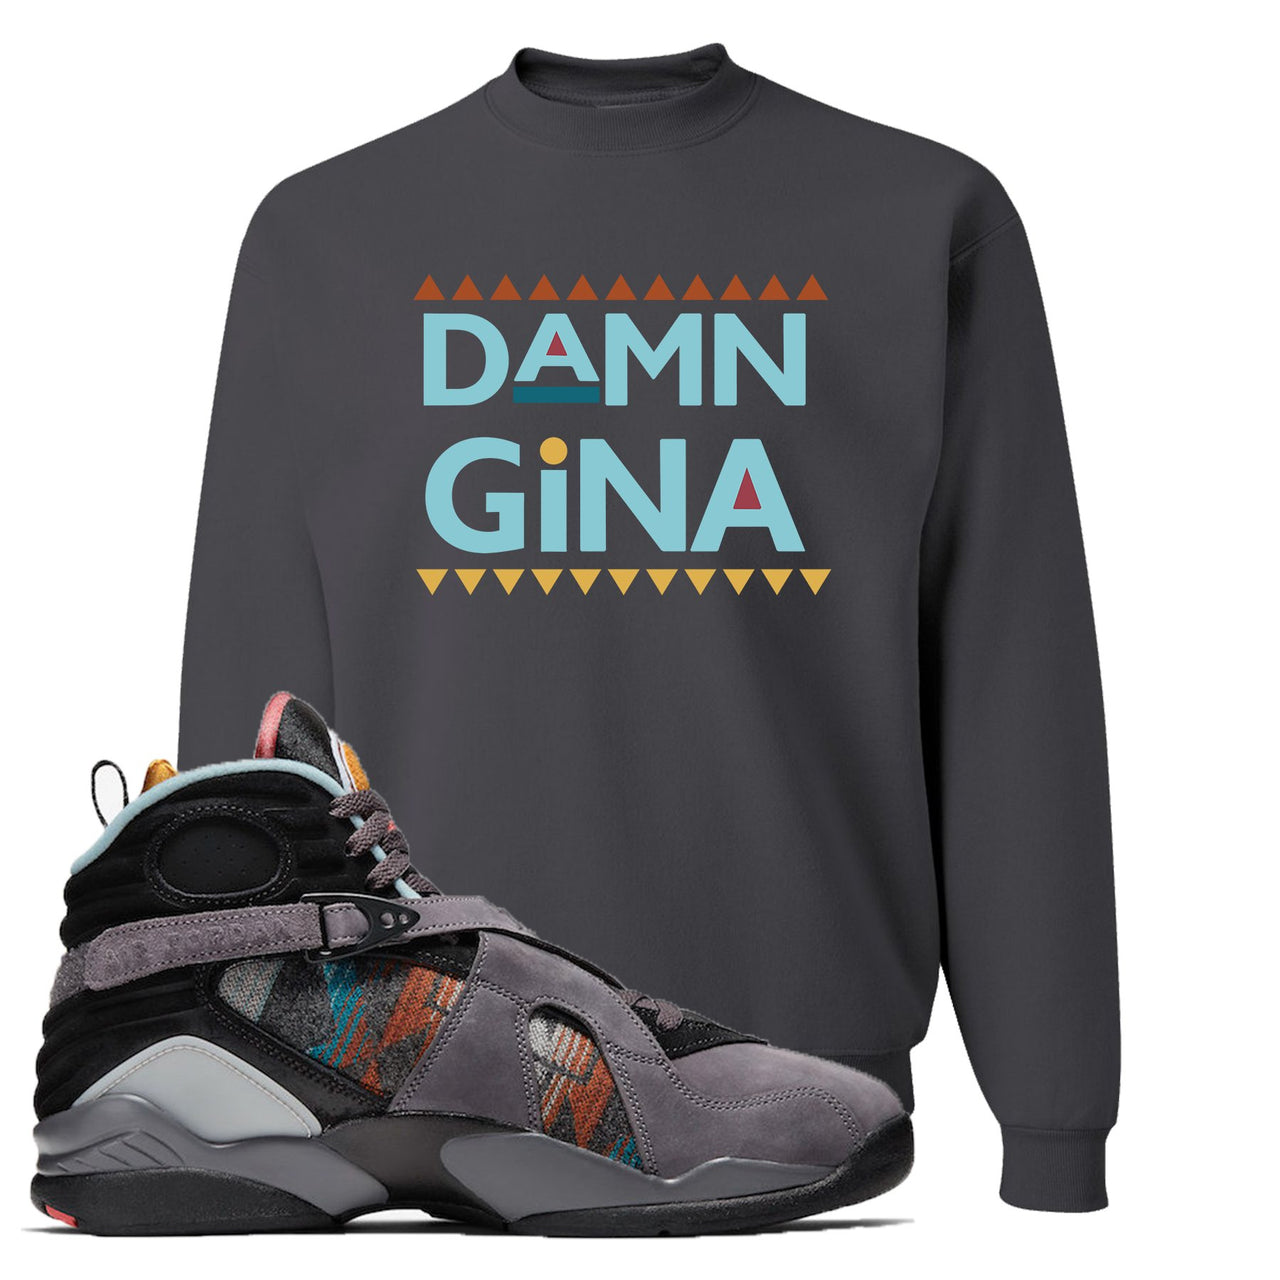 Jordan 8 N7 Pendleton Damn Gina Charcoal Gray Sneaker Hook Up Crewneck Sweatshirt